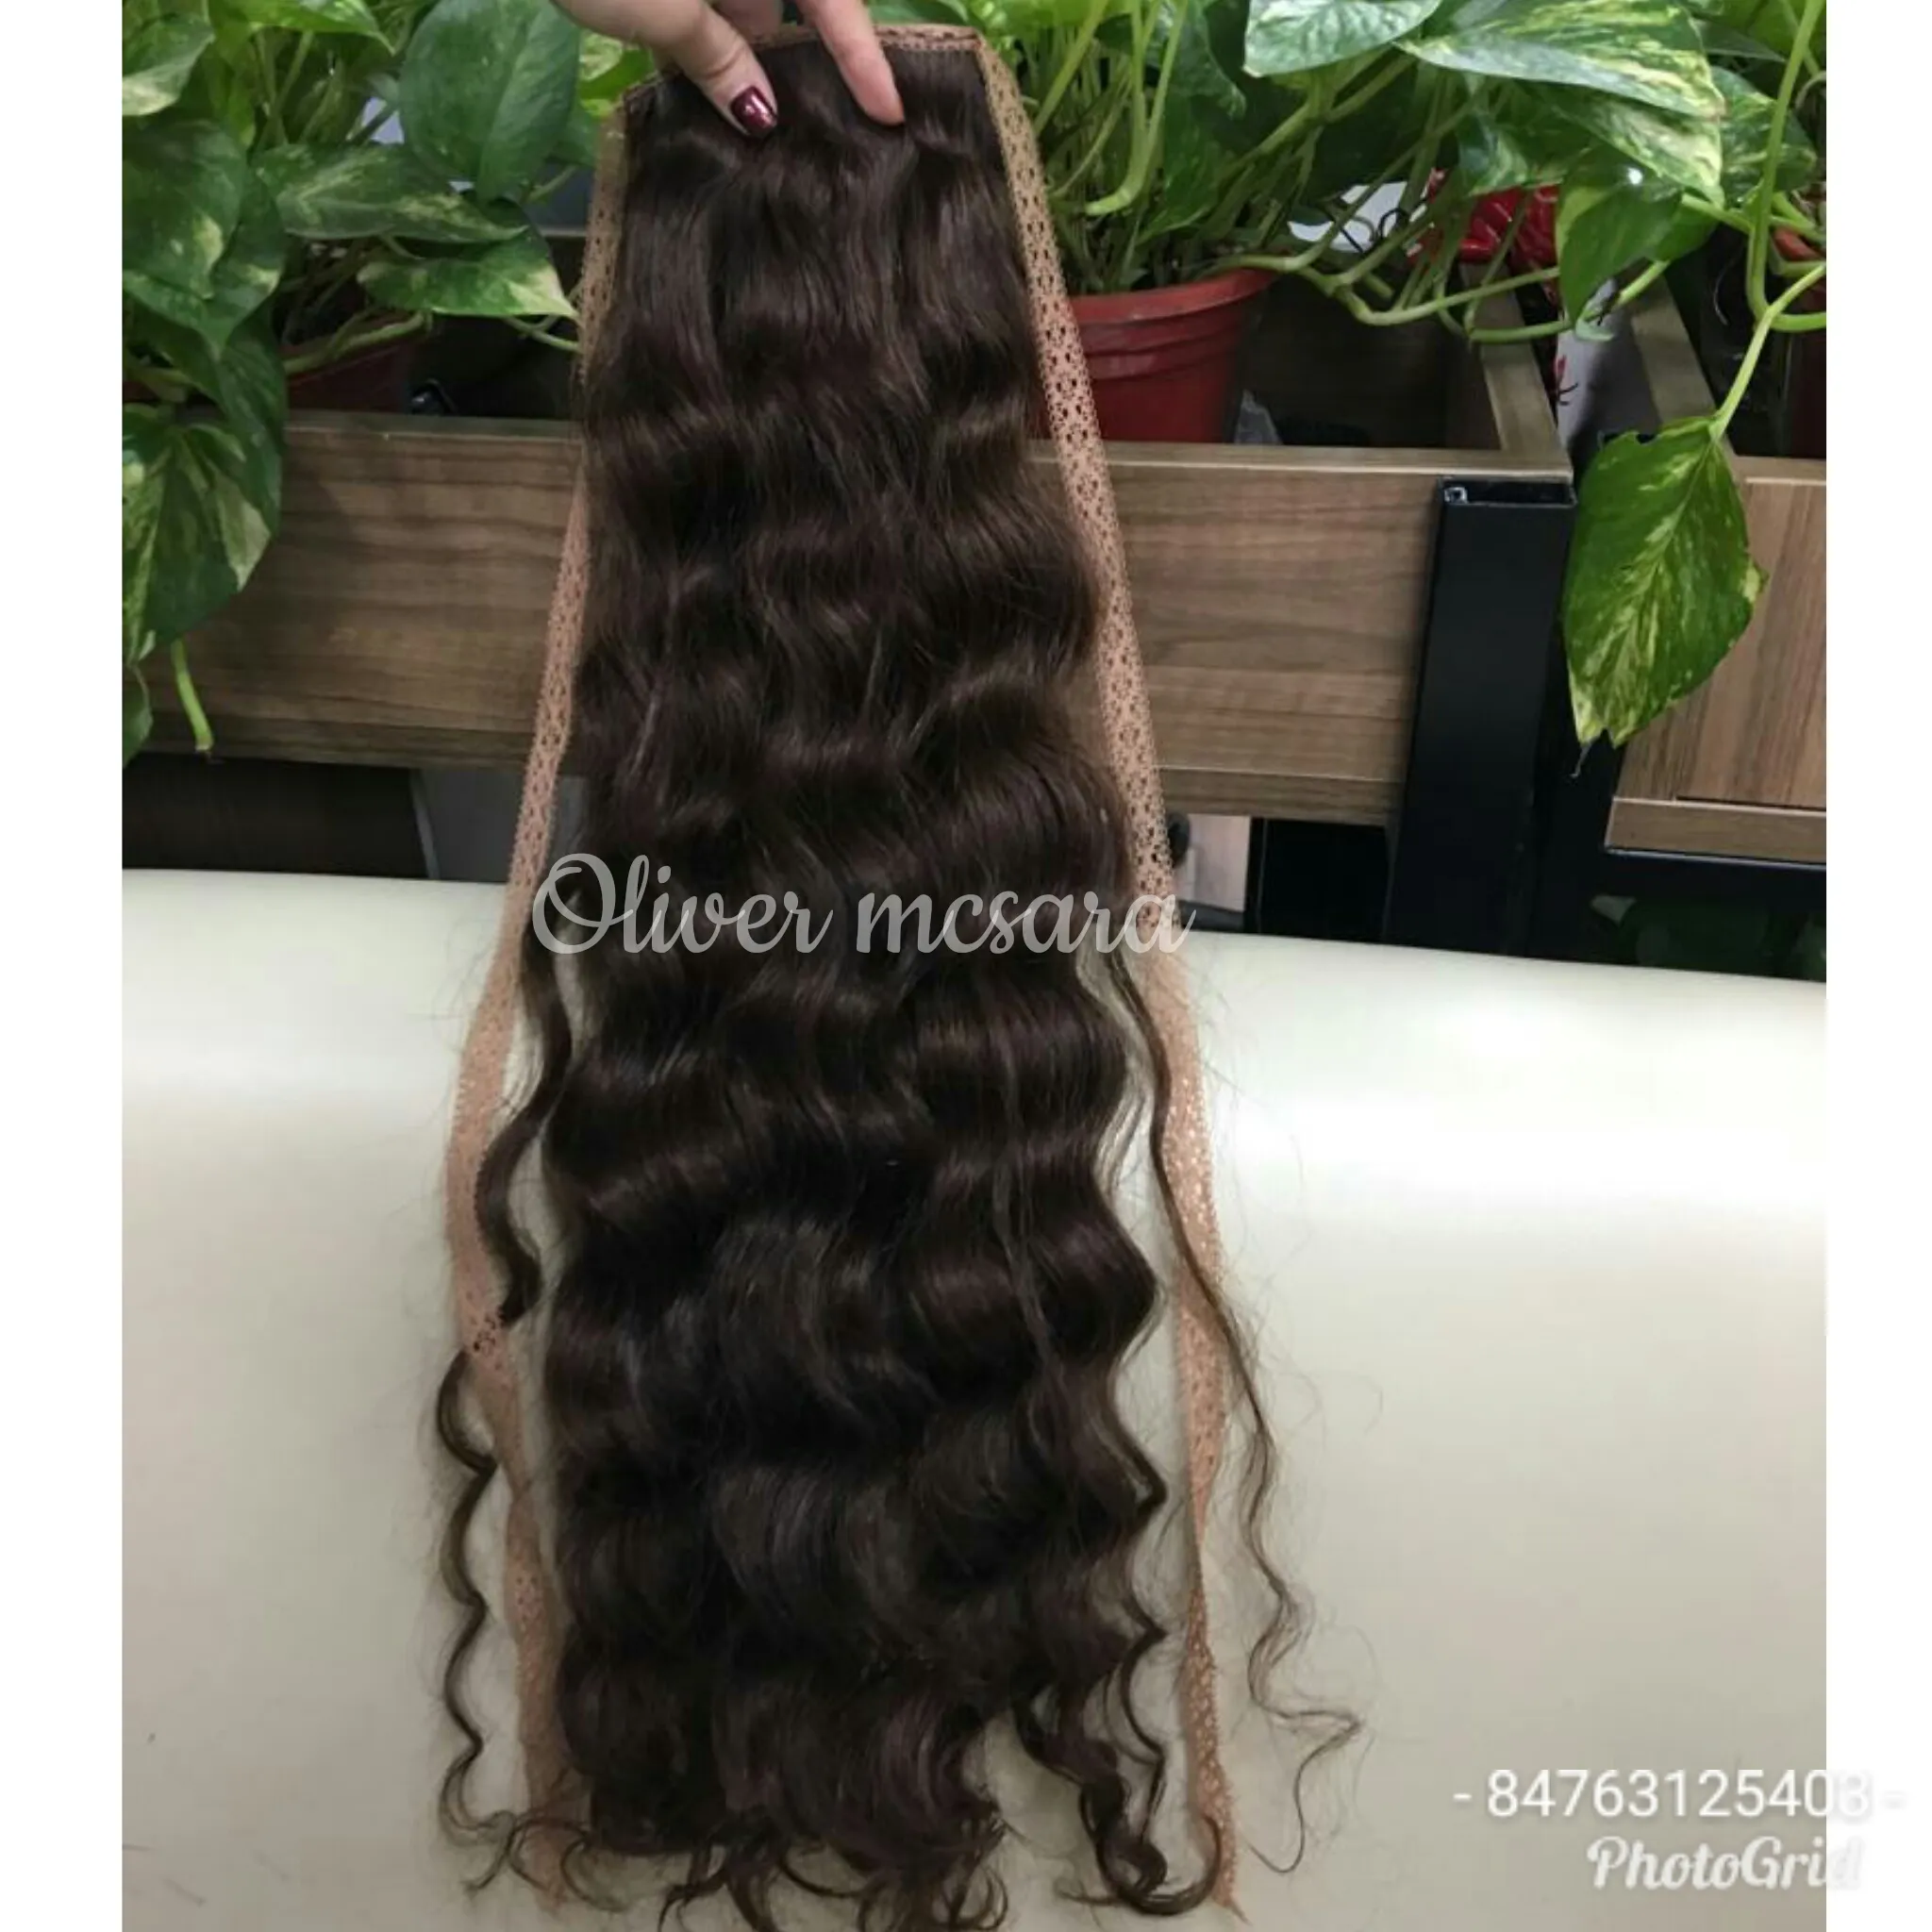 Raw Vietnamese human hair ponytail deep wavy 18 inches, dark brown 2 Mcsara hair